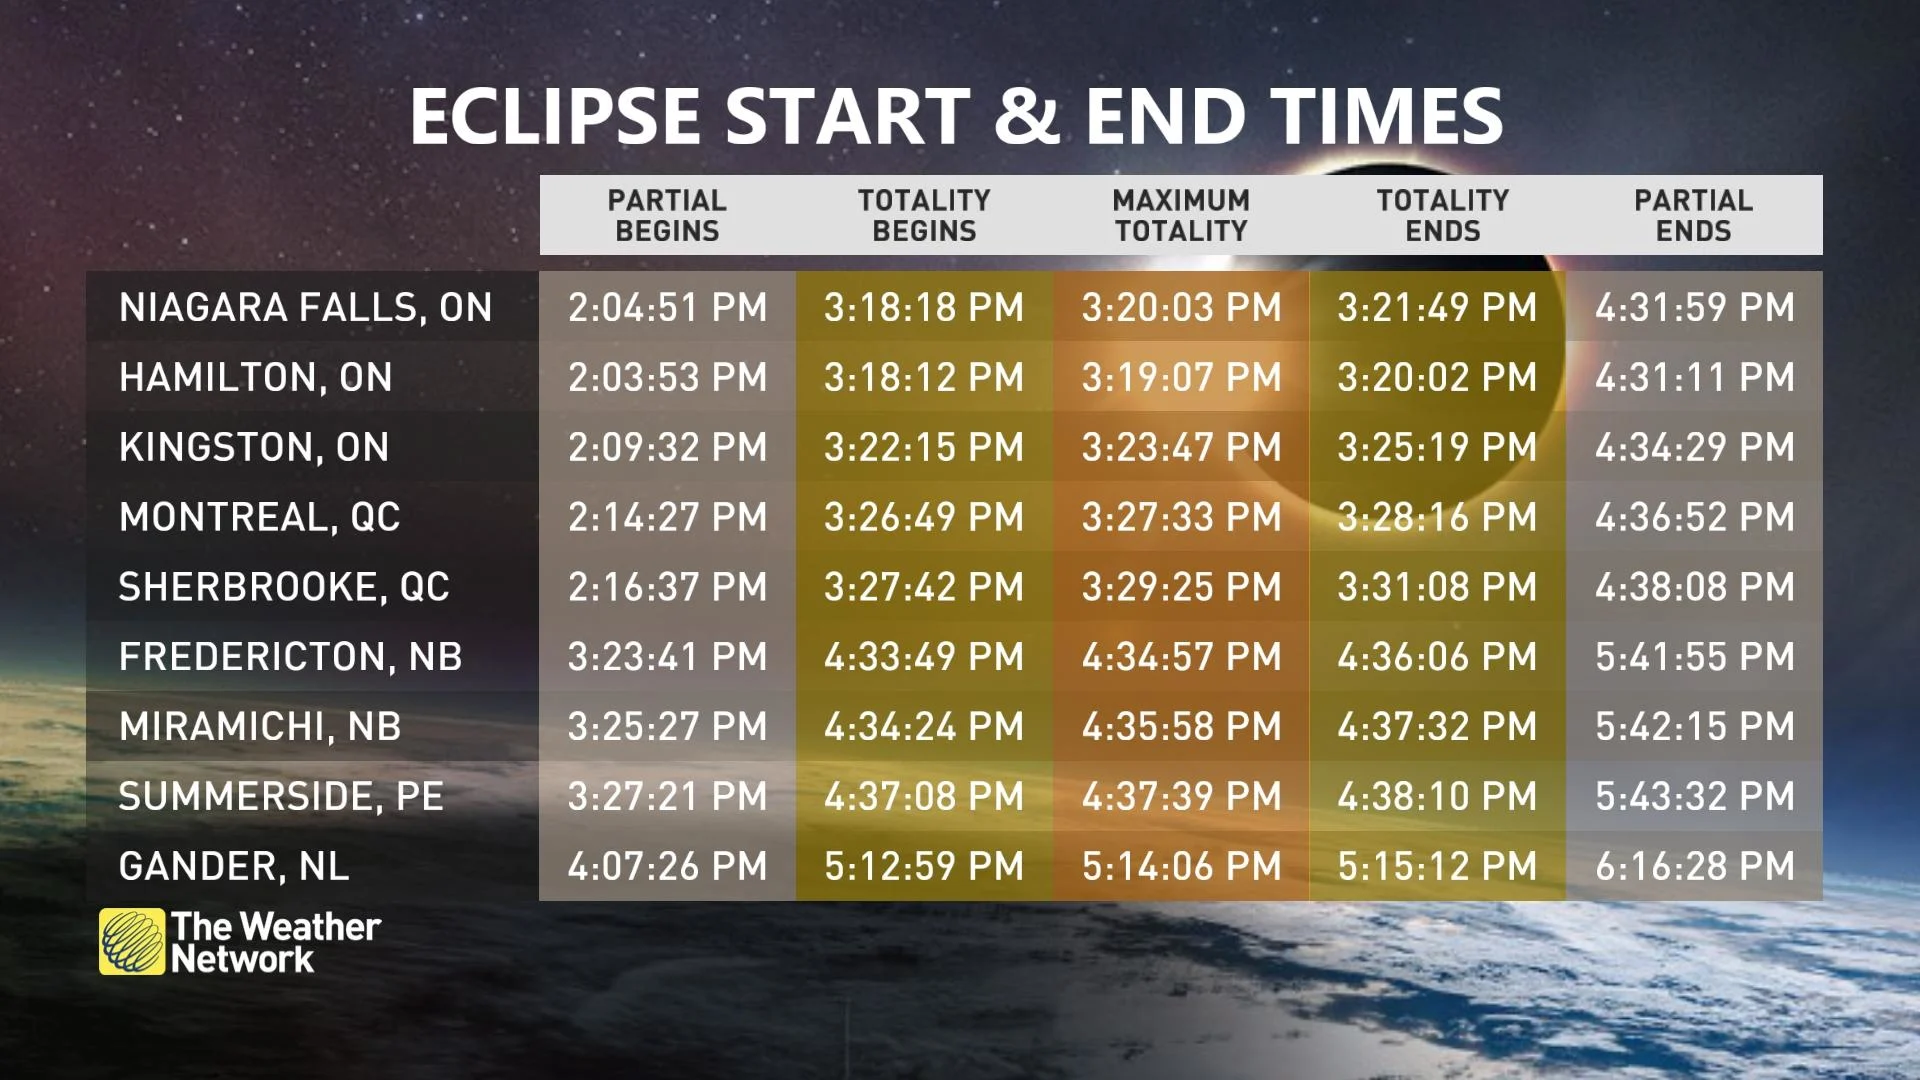 SolarEclipse Timetable1